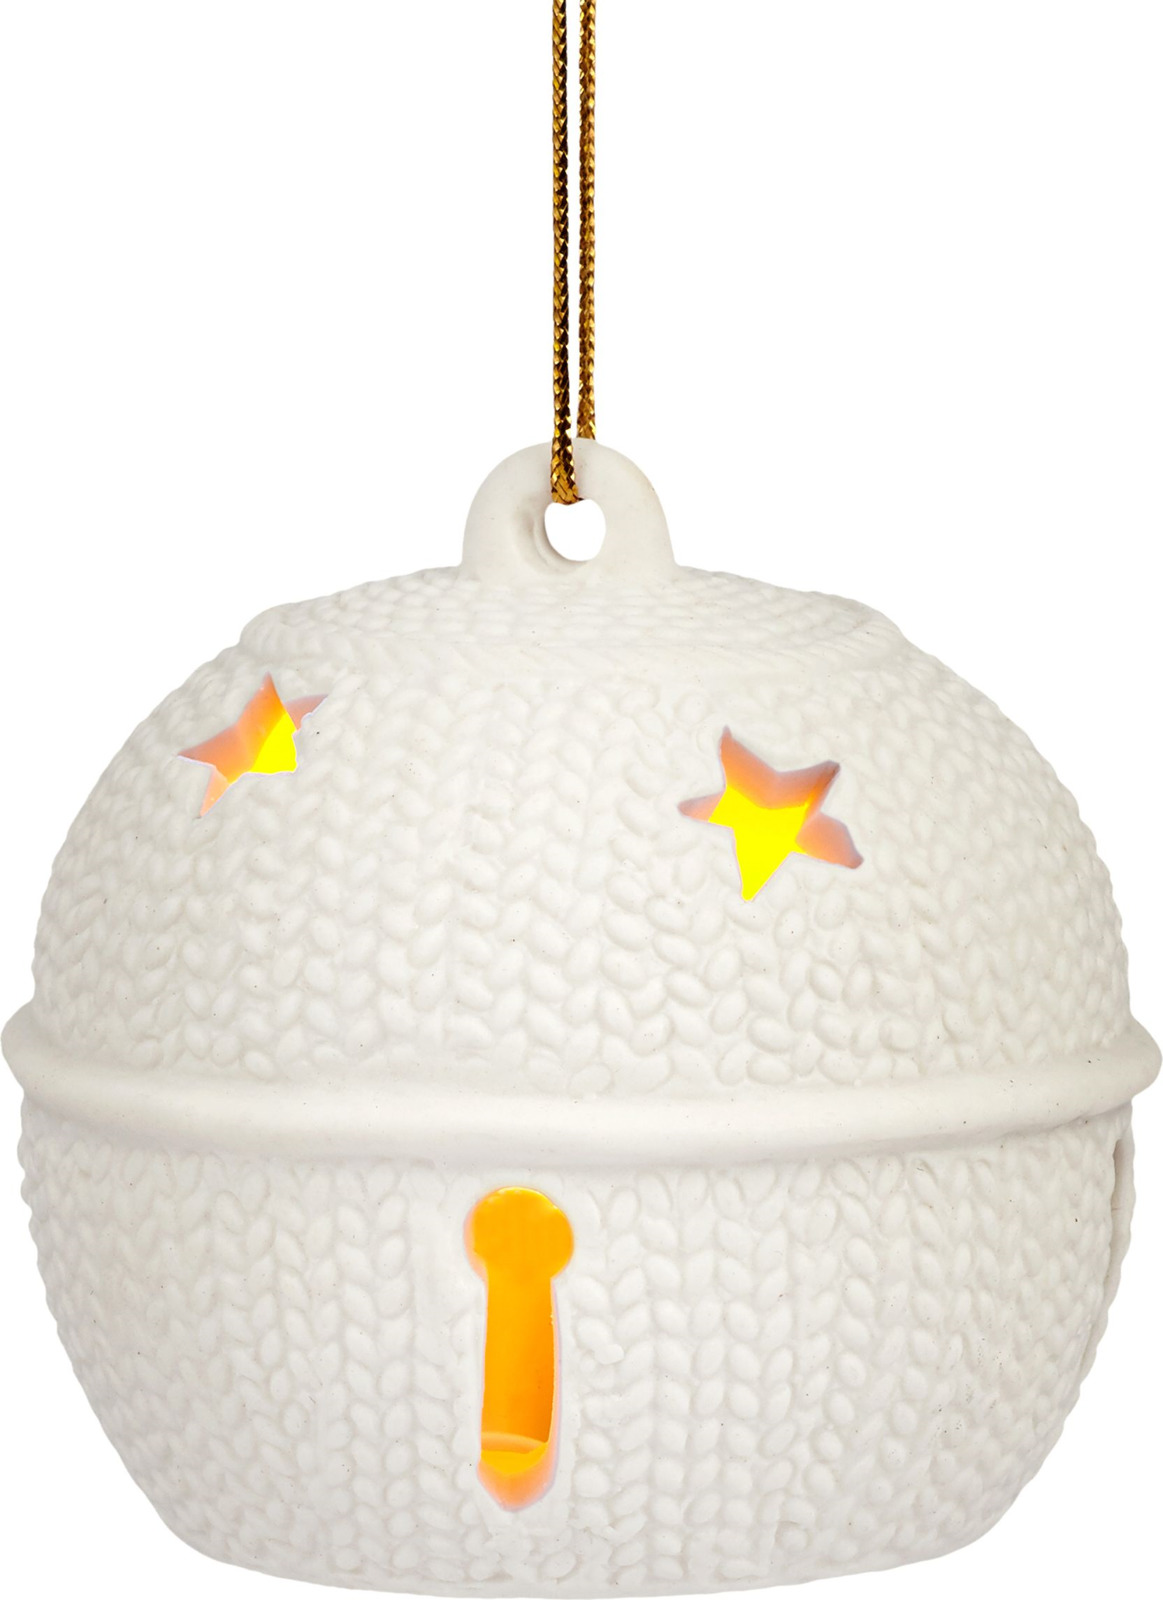 фото Елочная игрушка Magic Time Шар со звездами, со светодиодной подсветкой, 80892, белый, 7 х 7 х 7 см